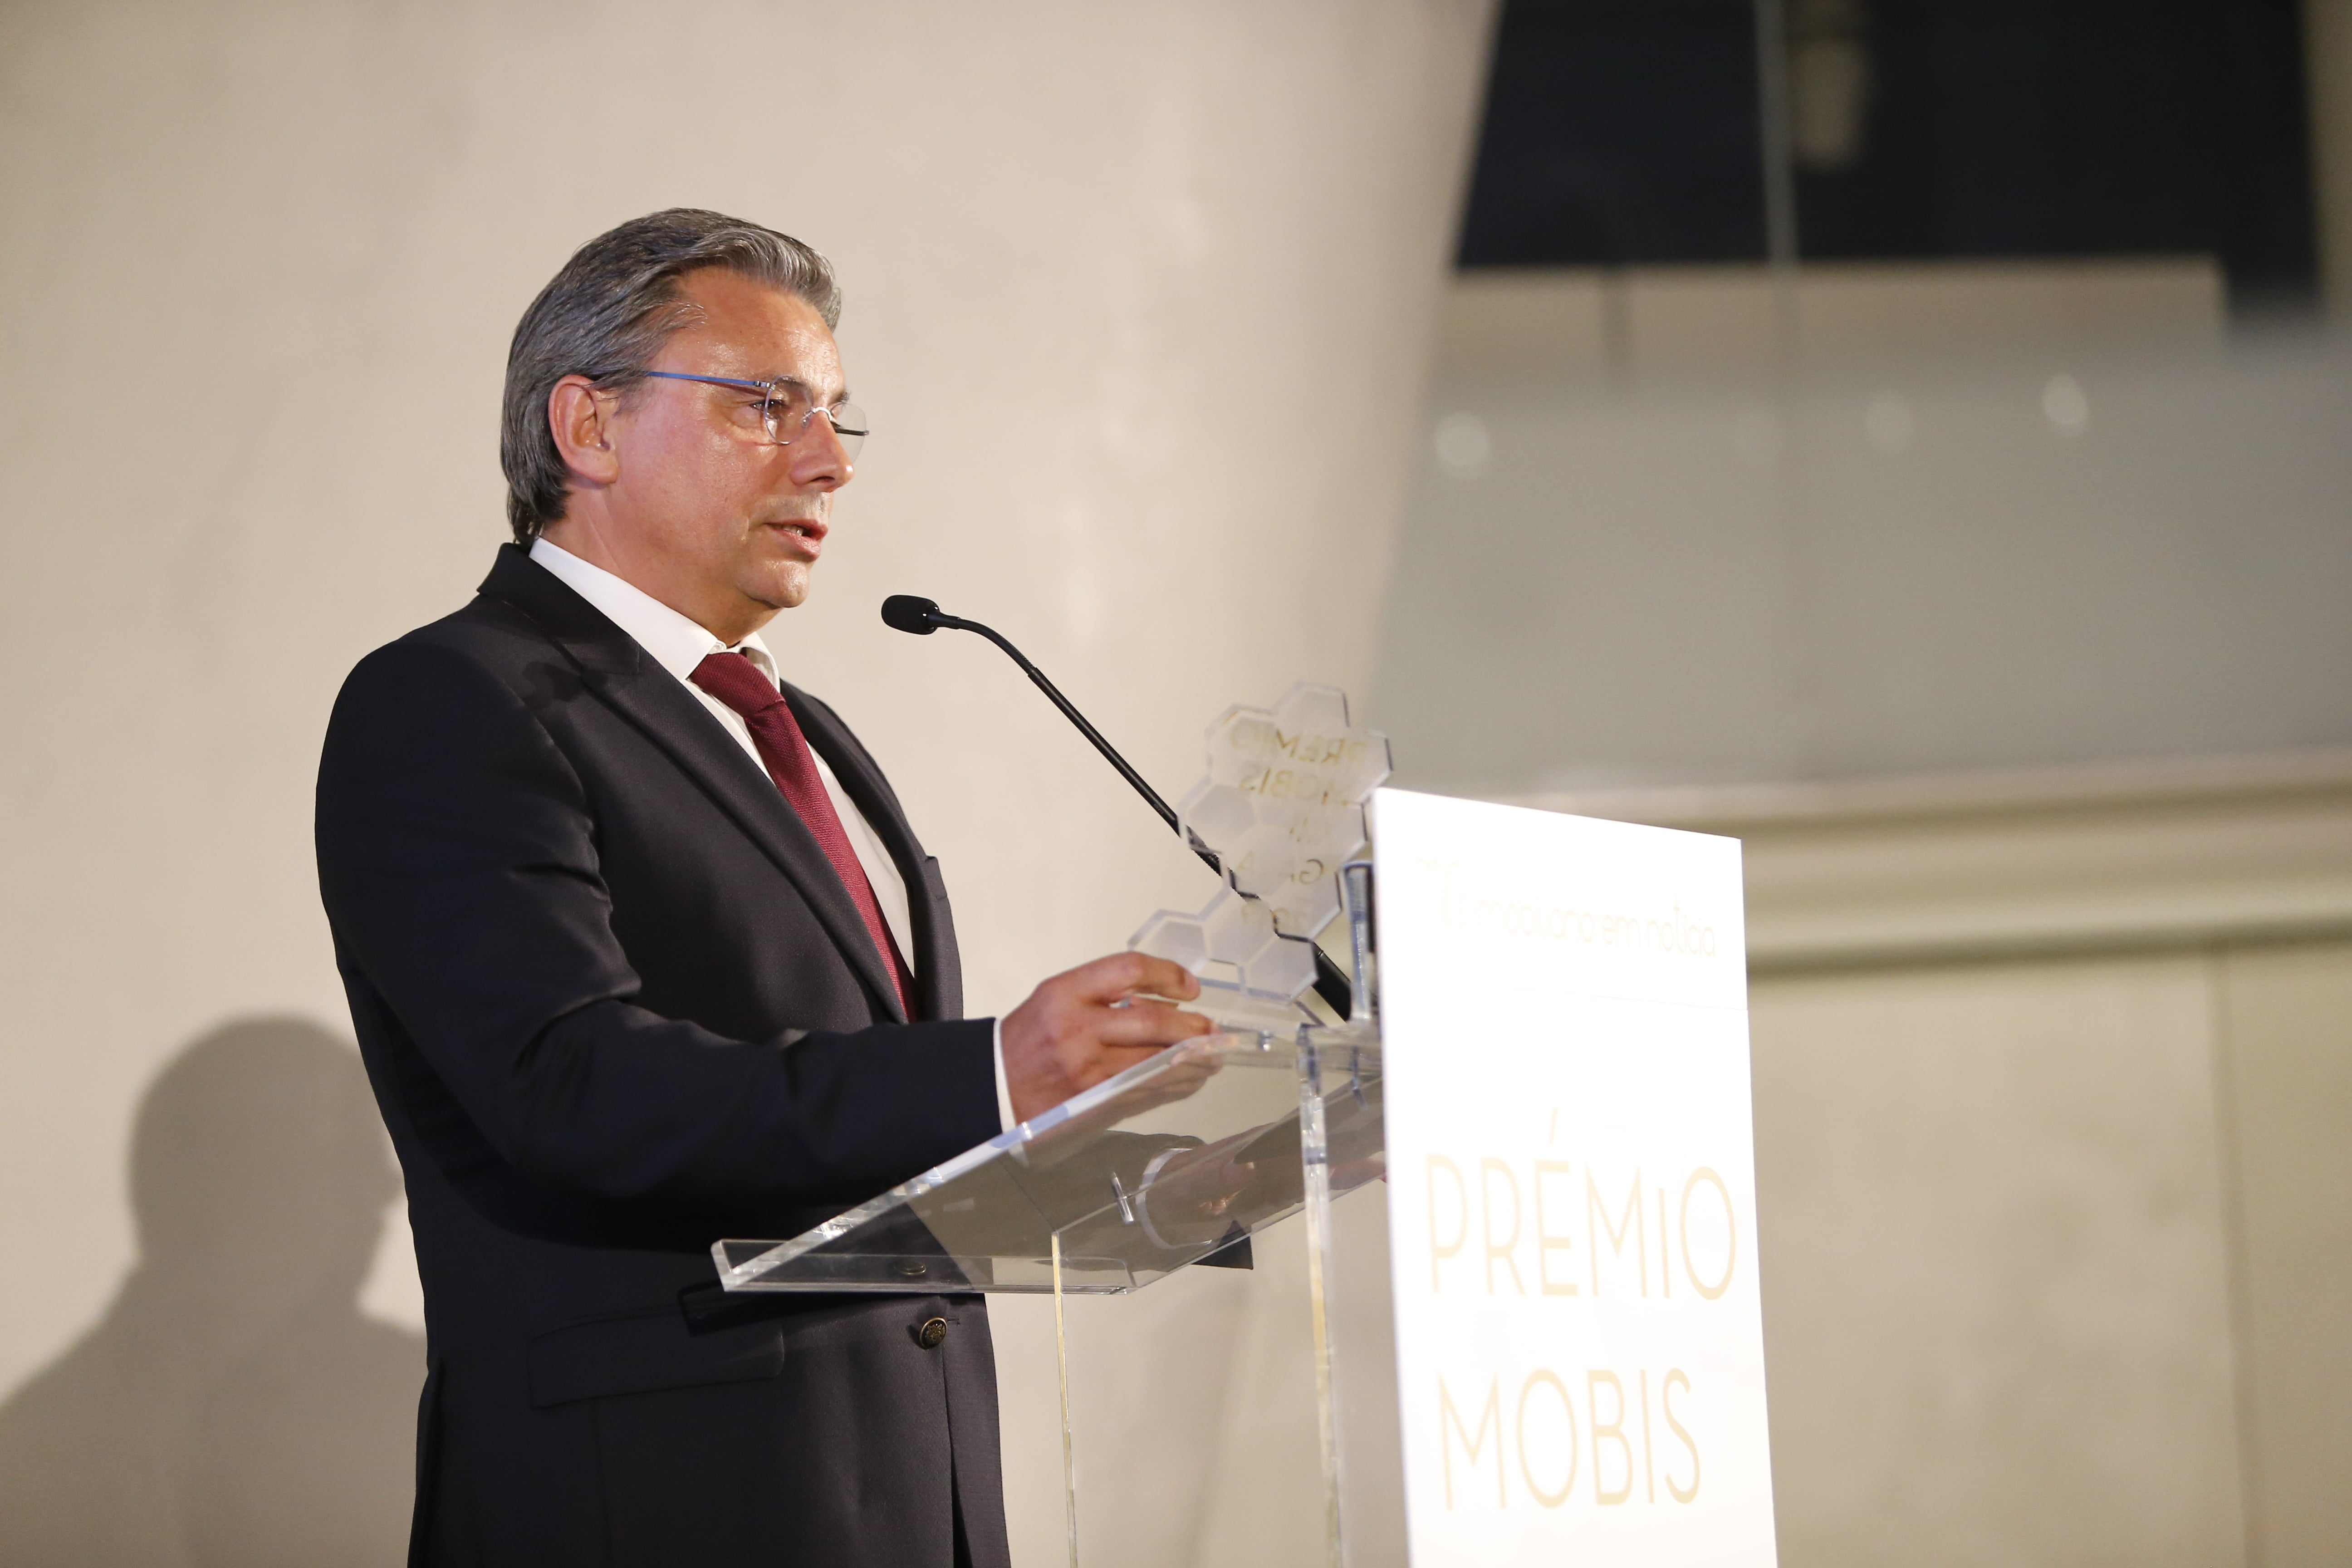 Gallery Prémio Mobis 2019